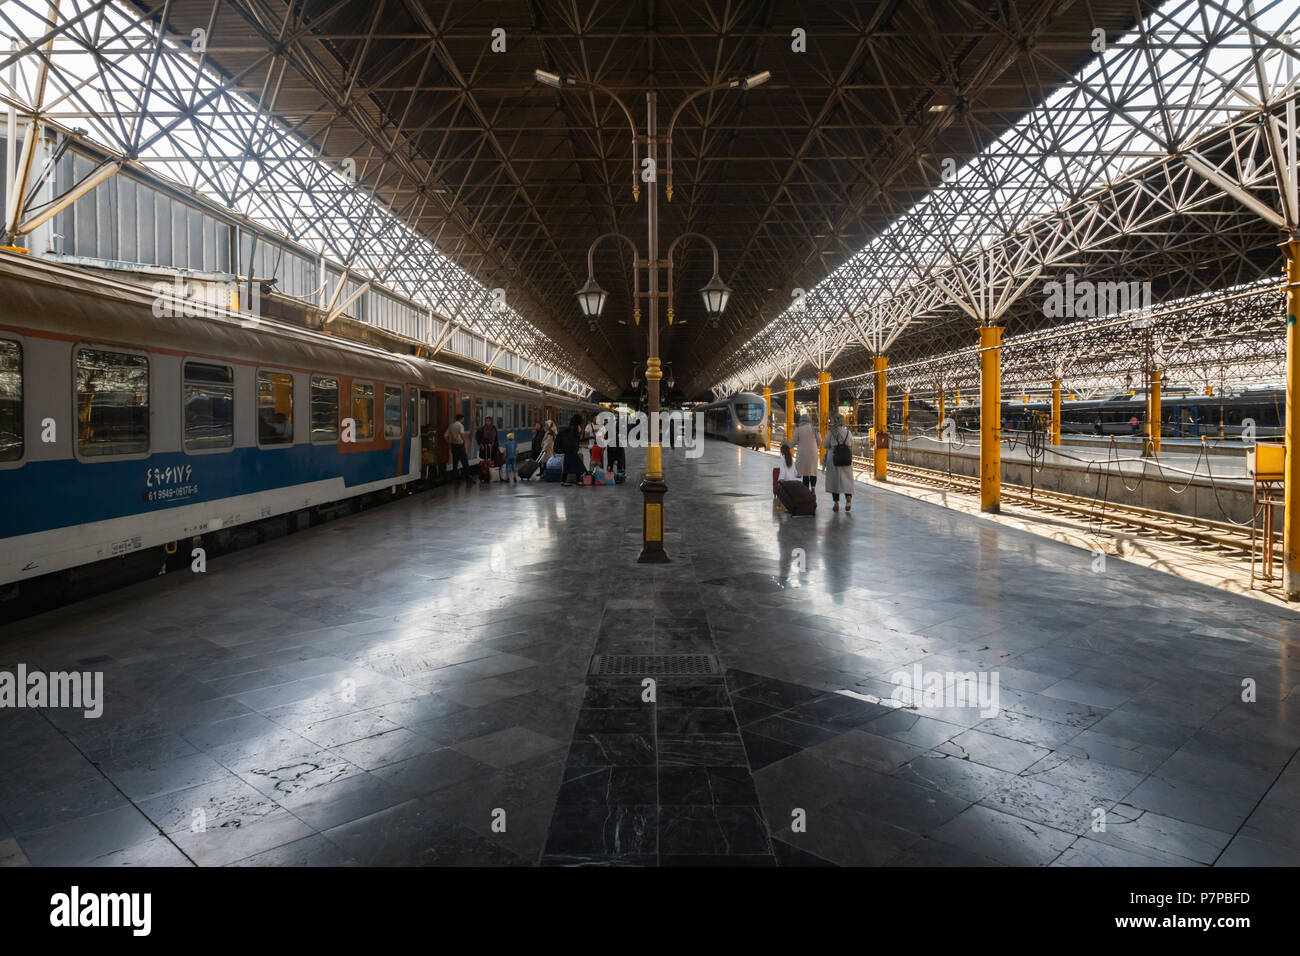 Shiraz, Iran - June 2018: Shiraz railway station platform in Iran. Shiraz is a popular tourist destination in Iran. Stock Photo